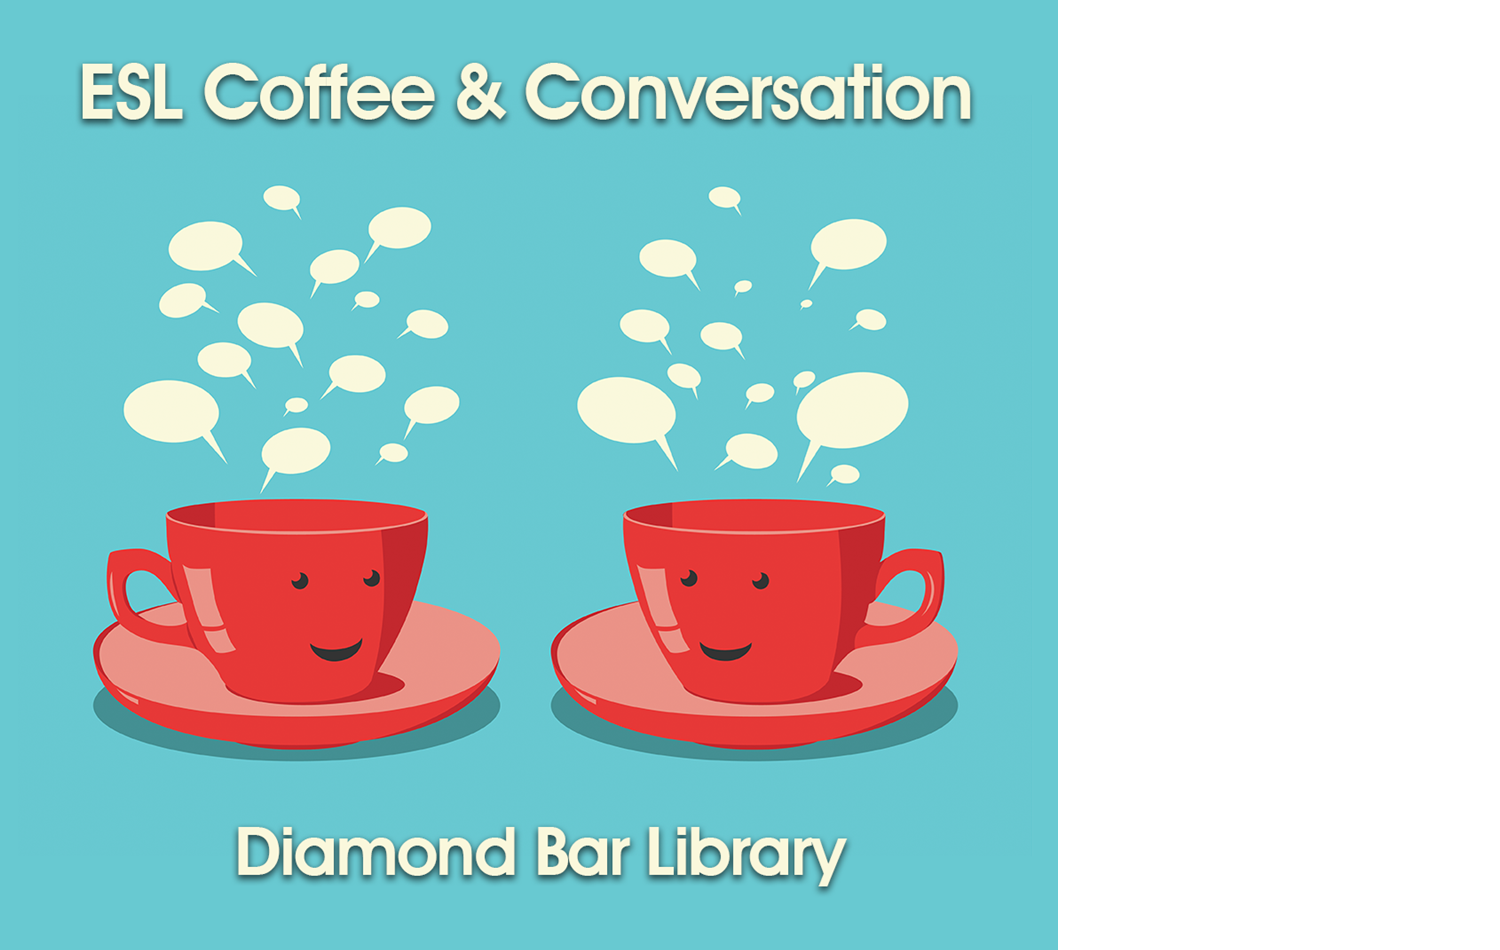 conversation clipart coffee conversation